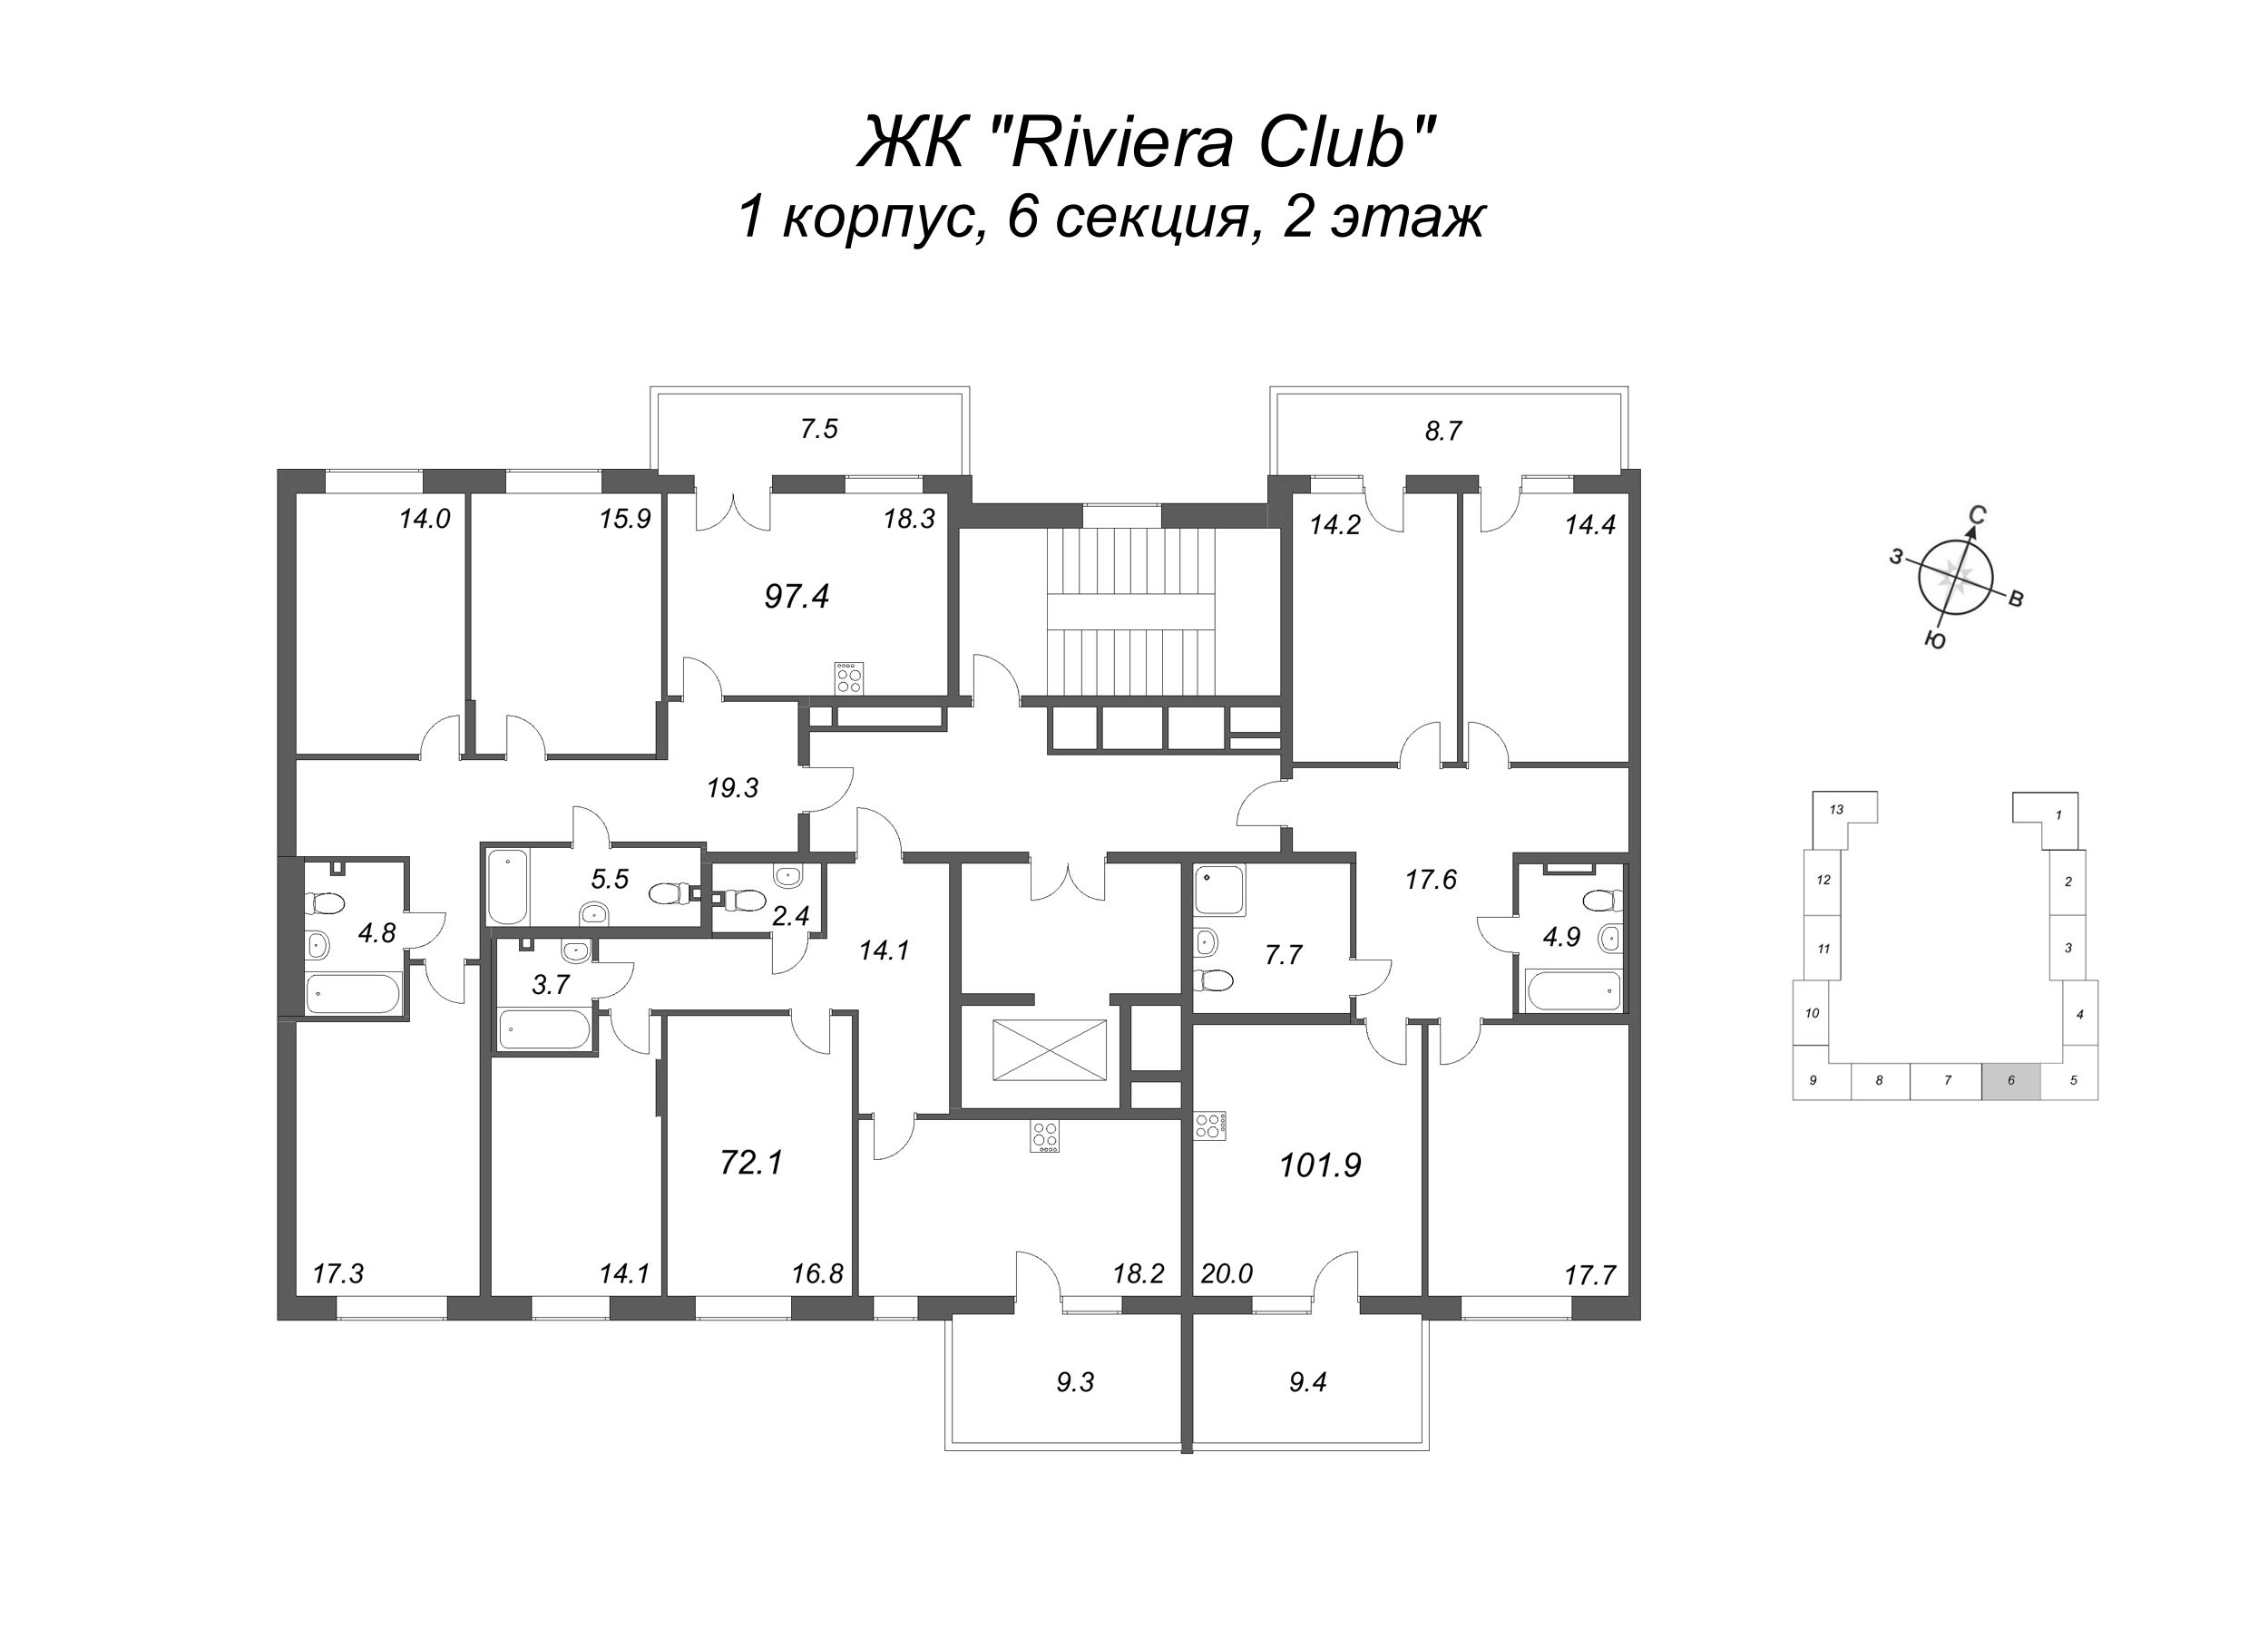 3-комнатная (Евро) квартира, 72.1 м² в ЖК "Riviera Club" - планировка этажа